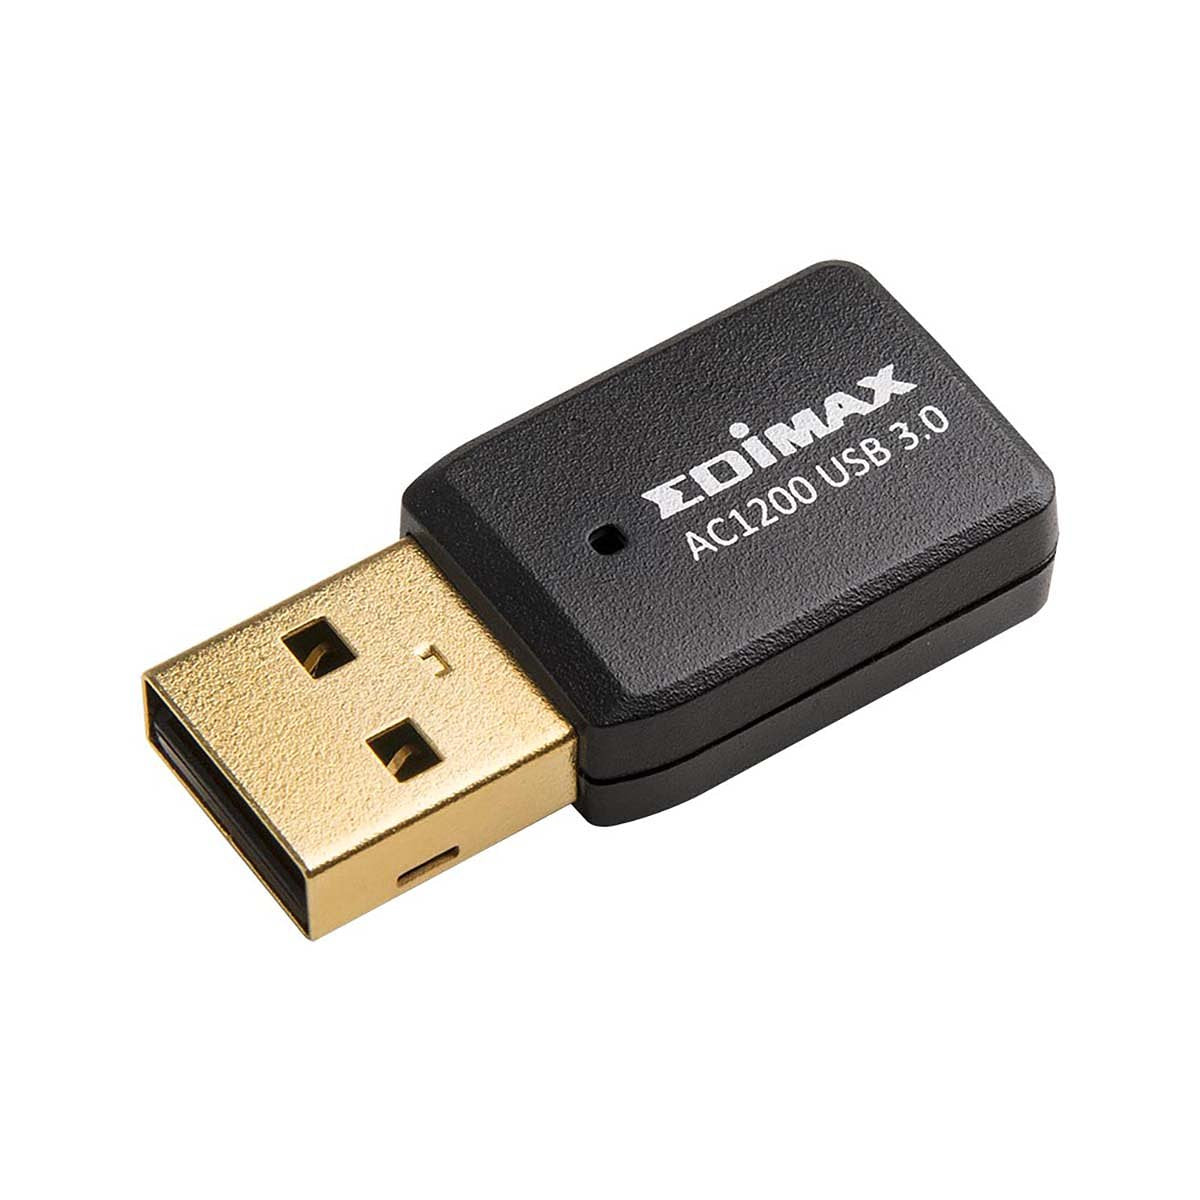 Draadloze USB-Adapter AC1200 Wi-Fi Zwart Edimax